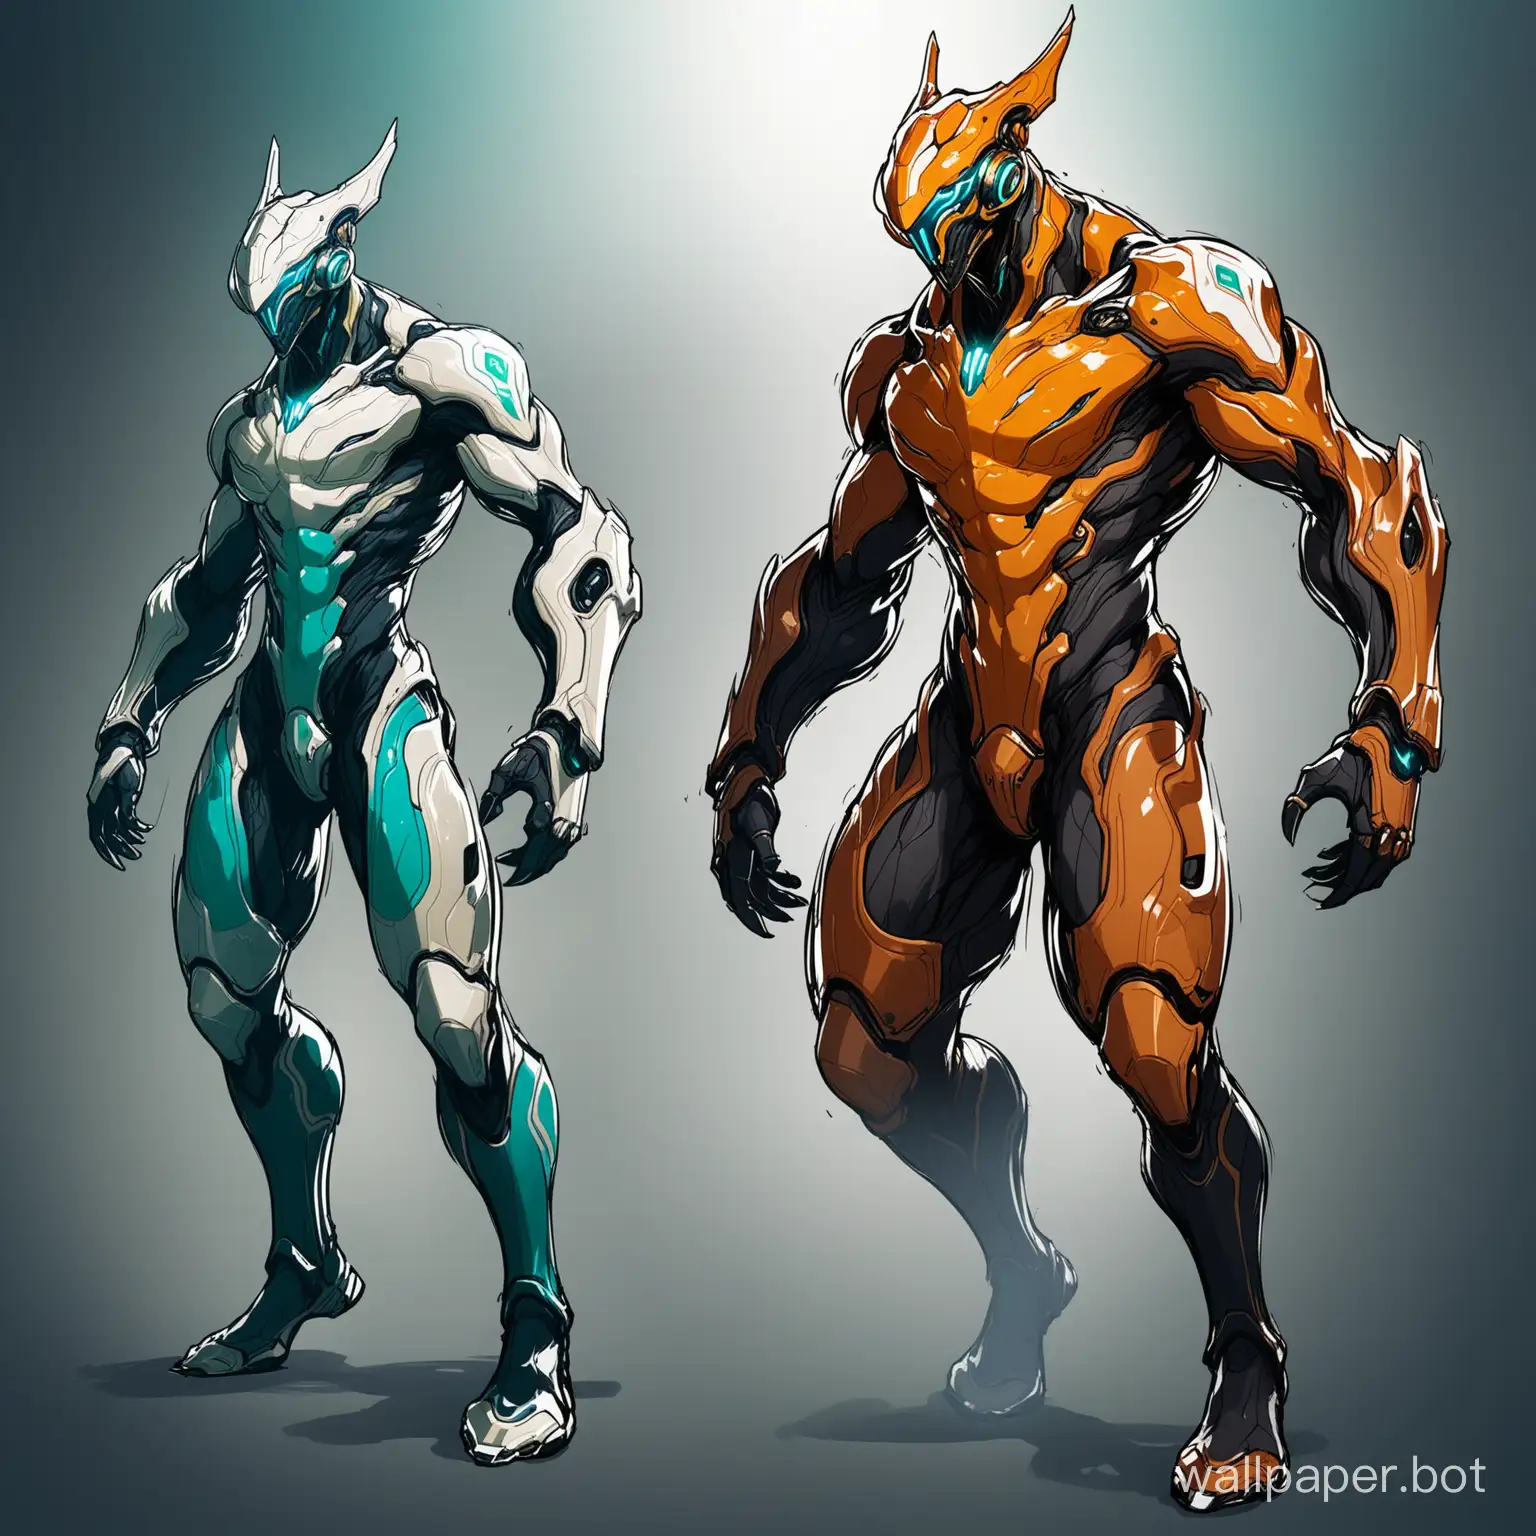 Futuristic-Cyborg-Giant-Thin-Free-Runner-with-FleshMachine-Fusion